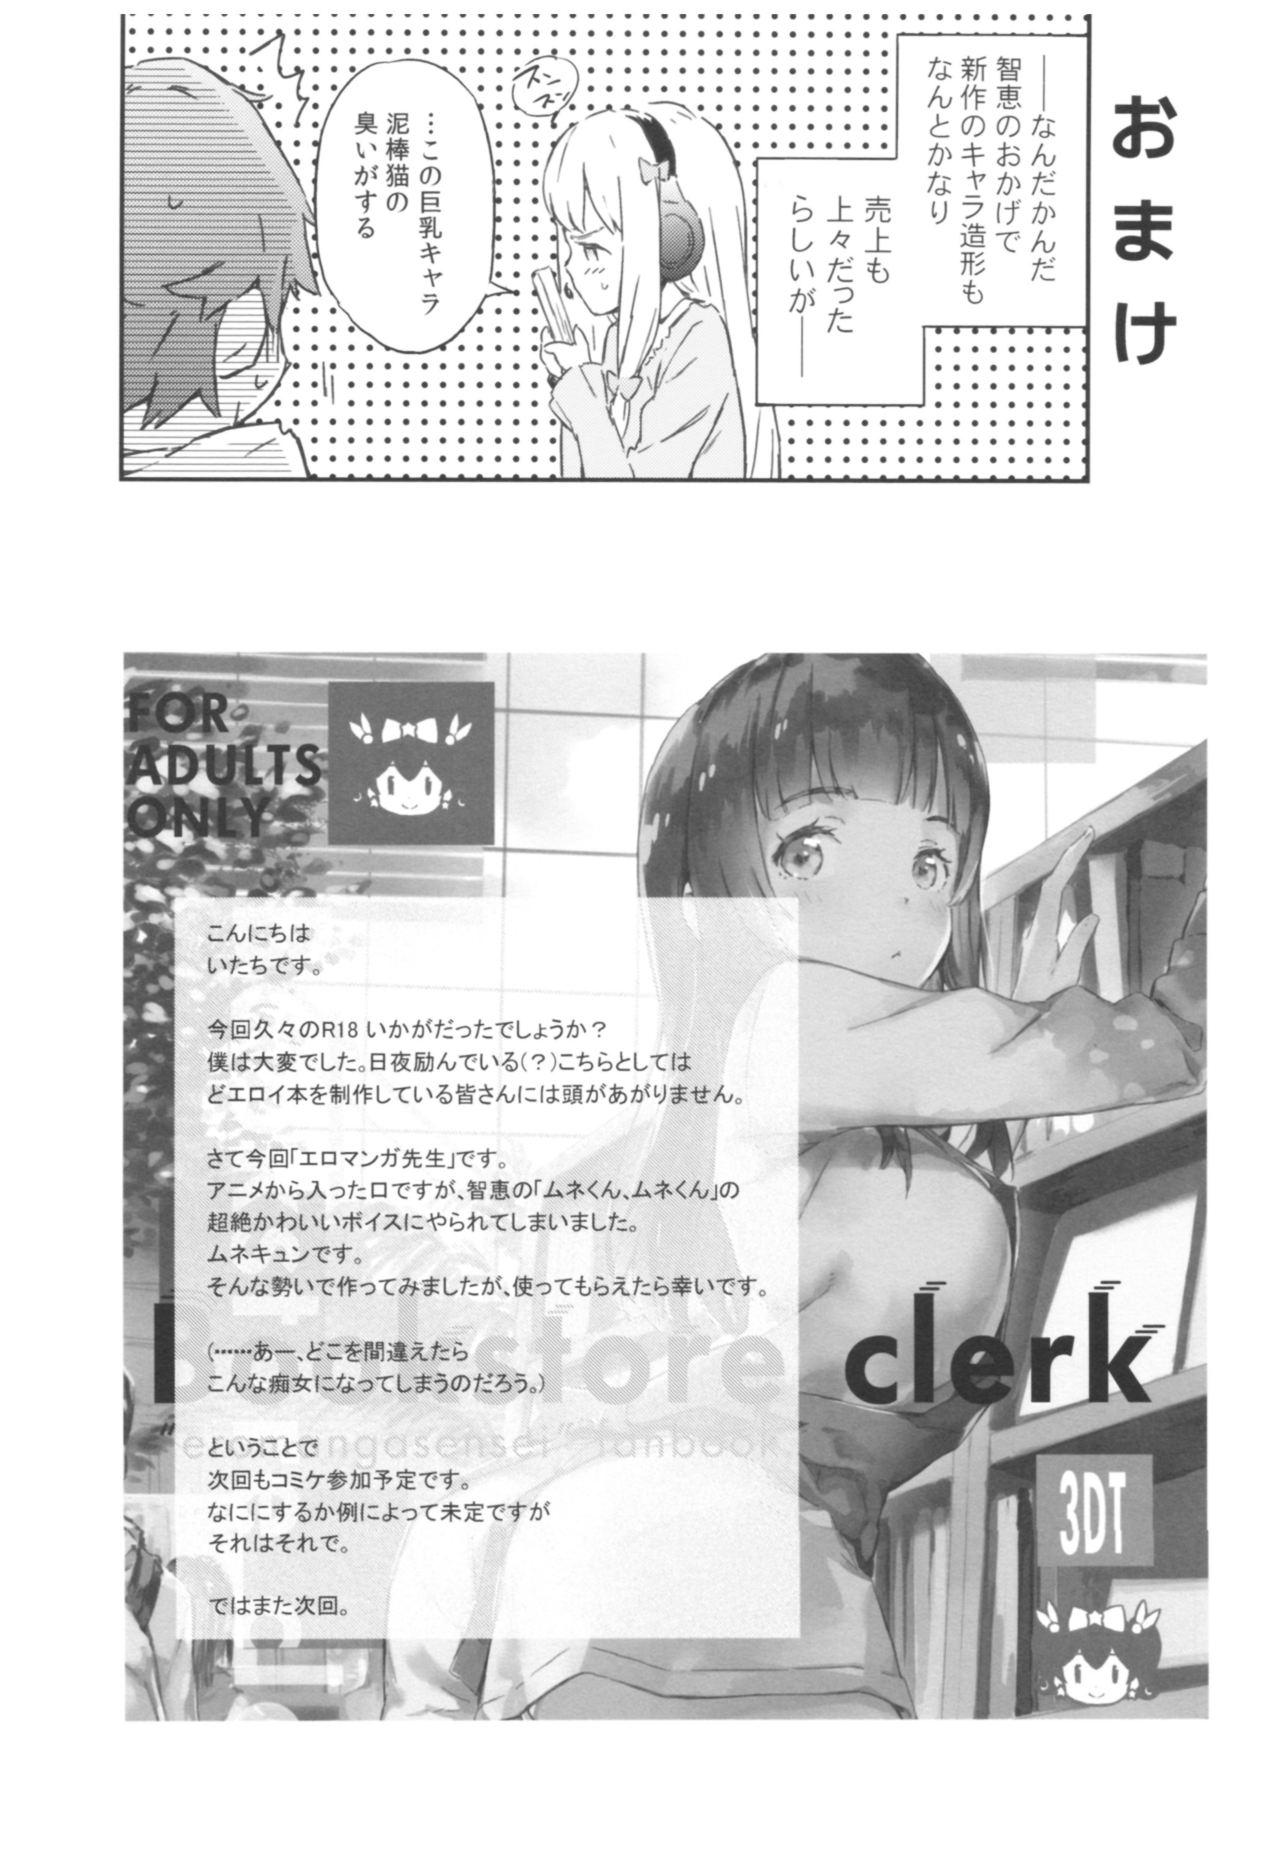 Bookstore clerk 17